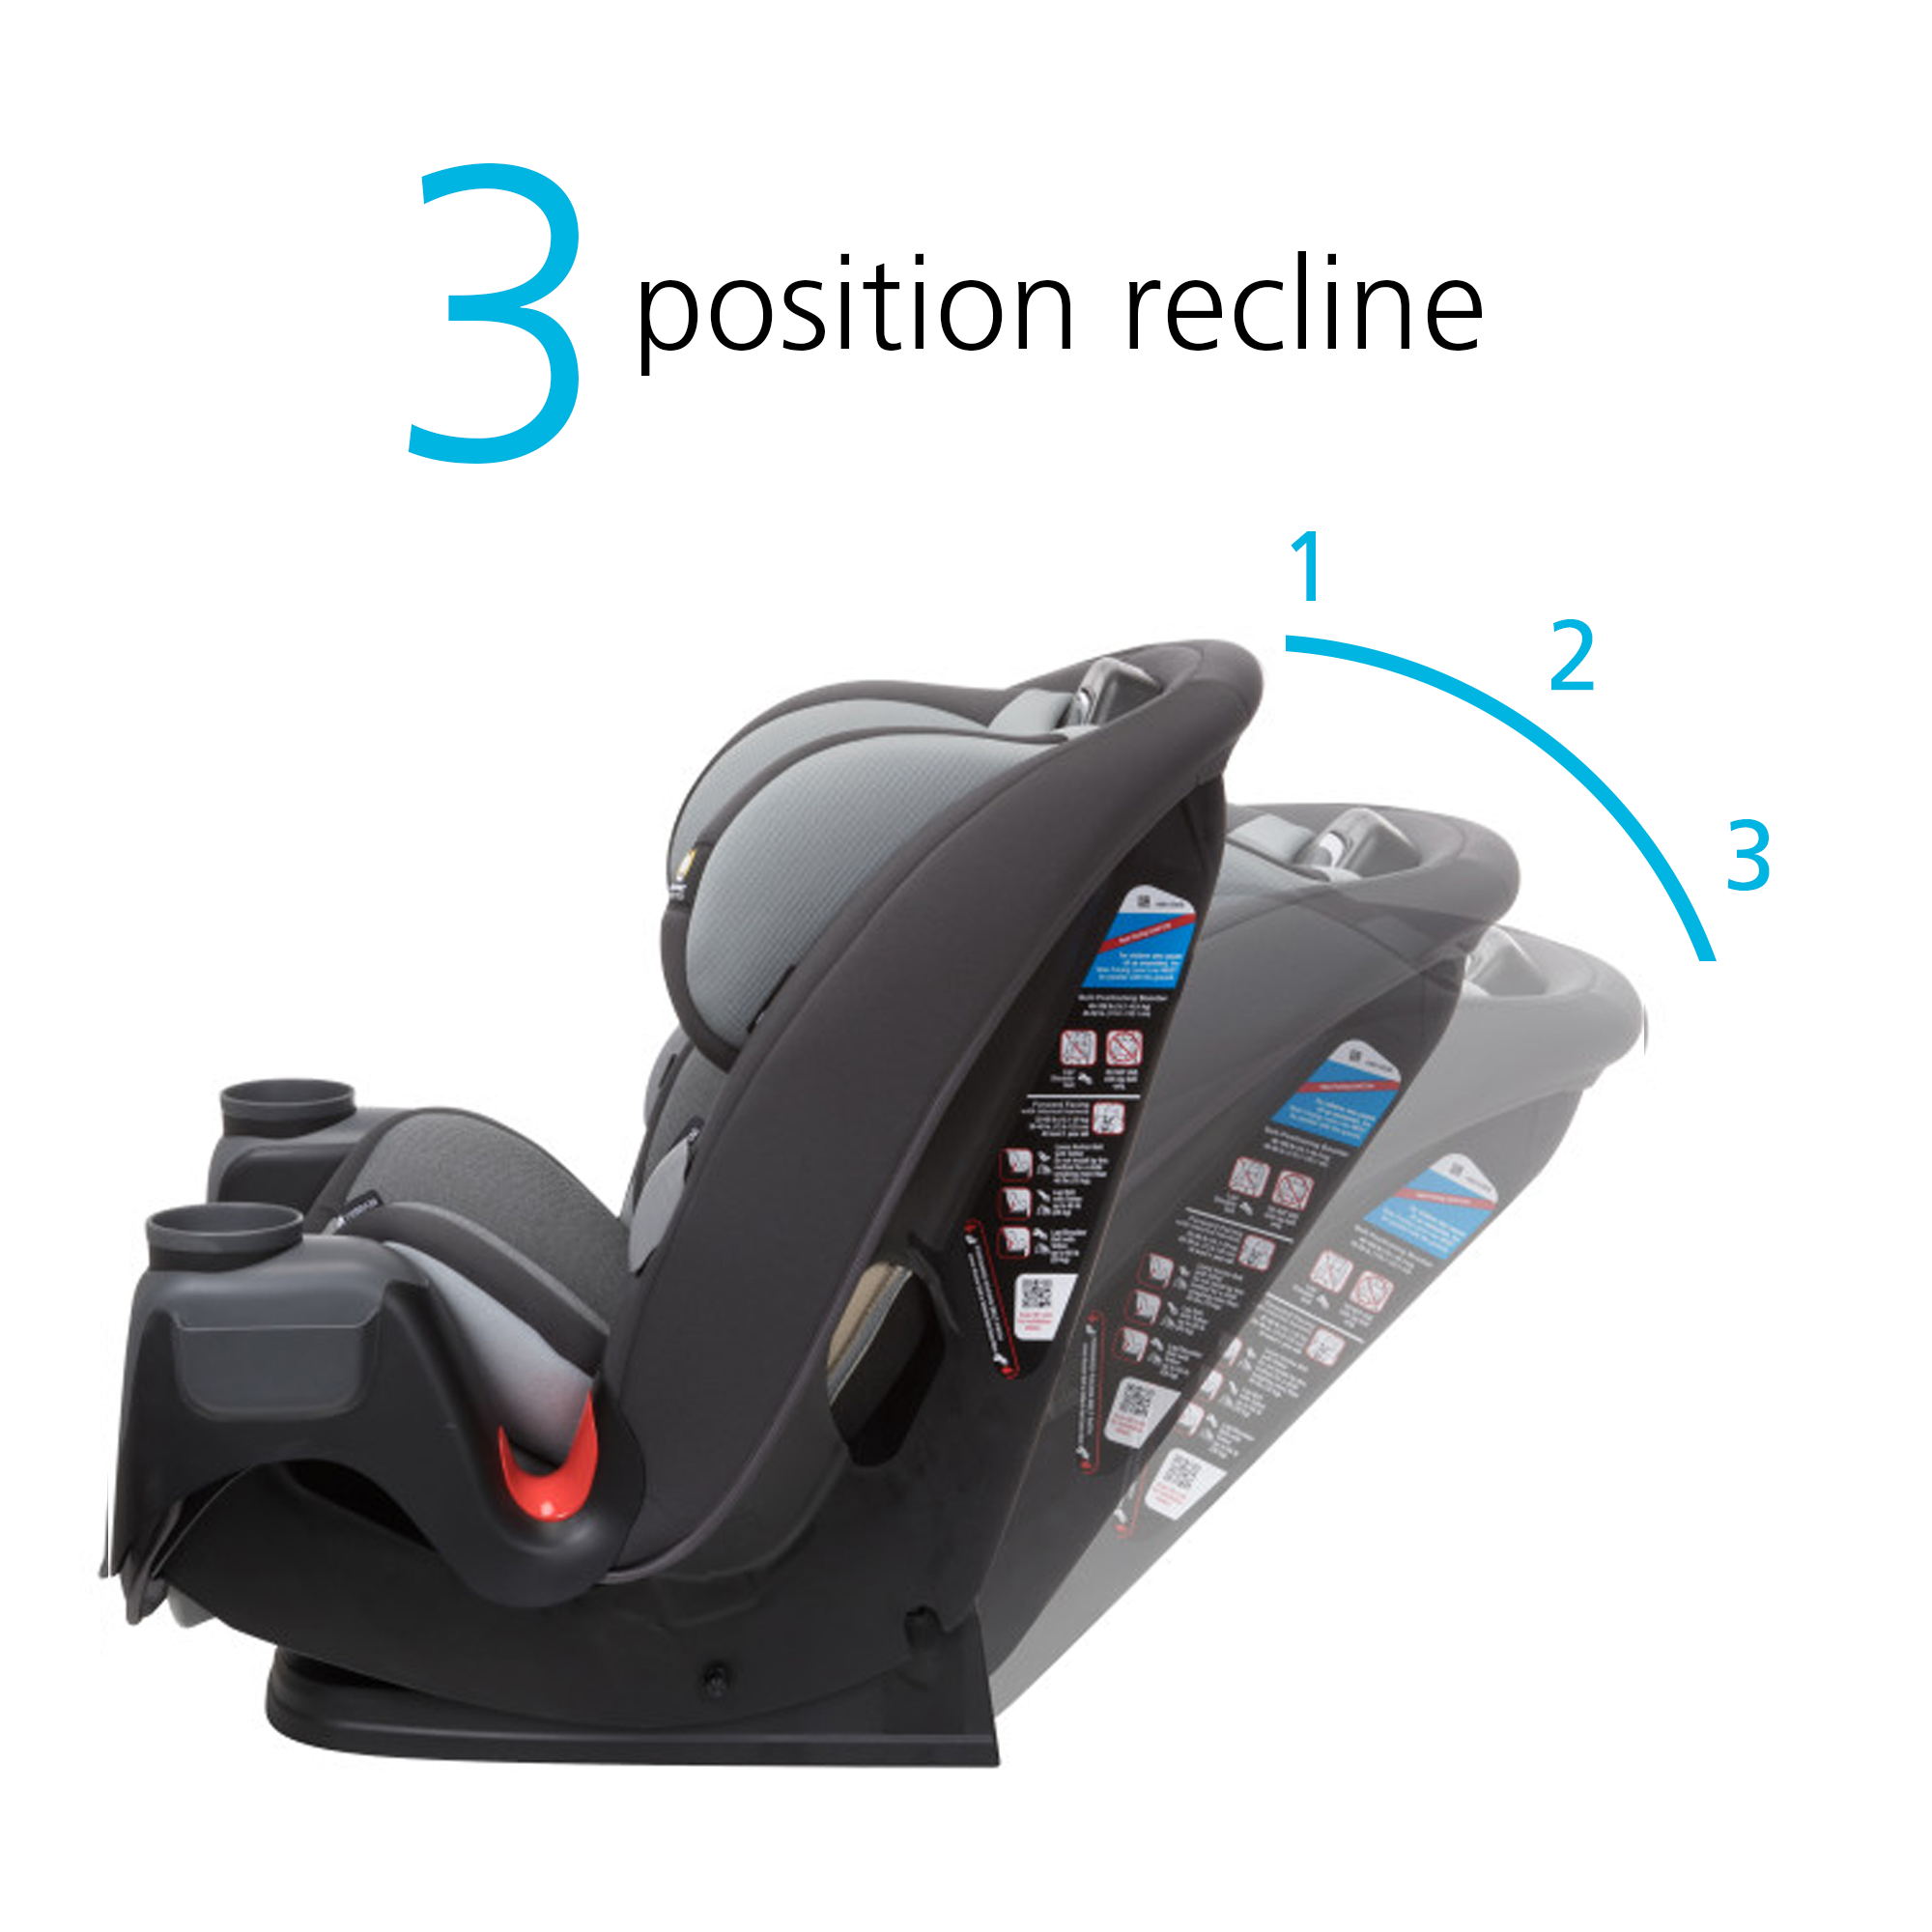 3 Position recline